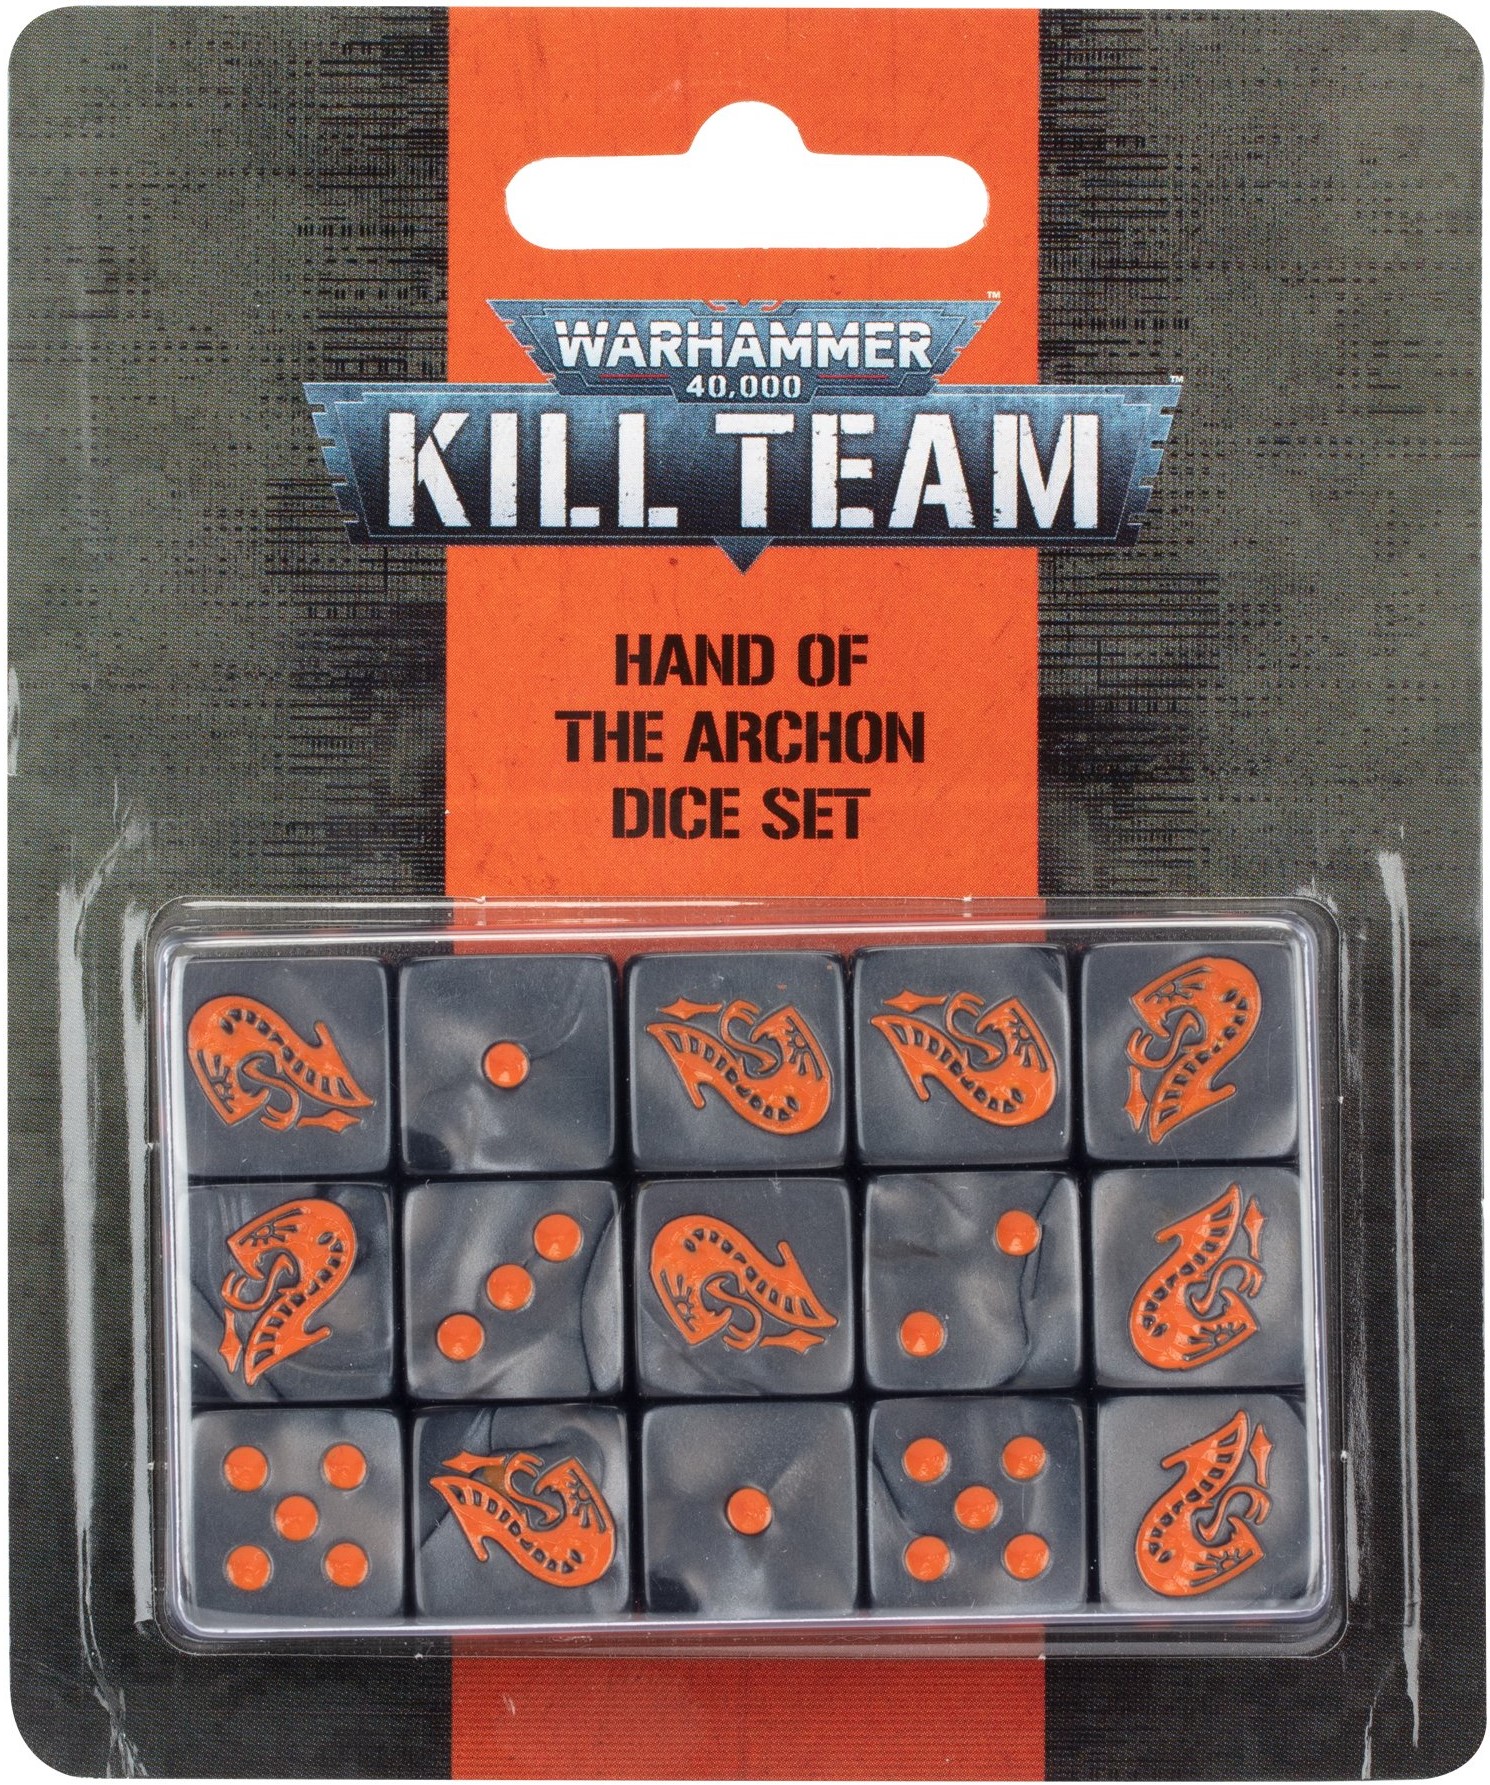 Warhammer 40,000: Kill Team - Hand of the Archon Dice Set